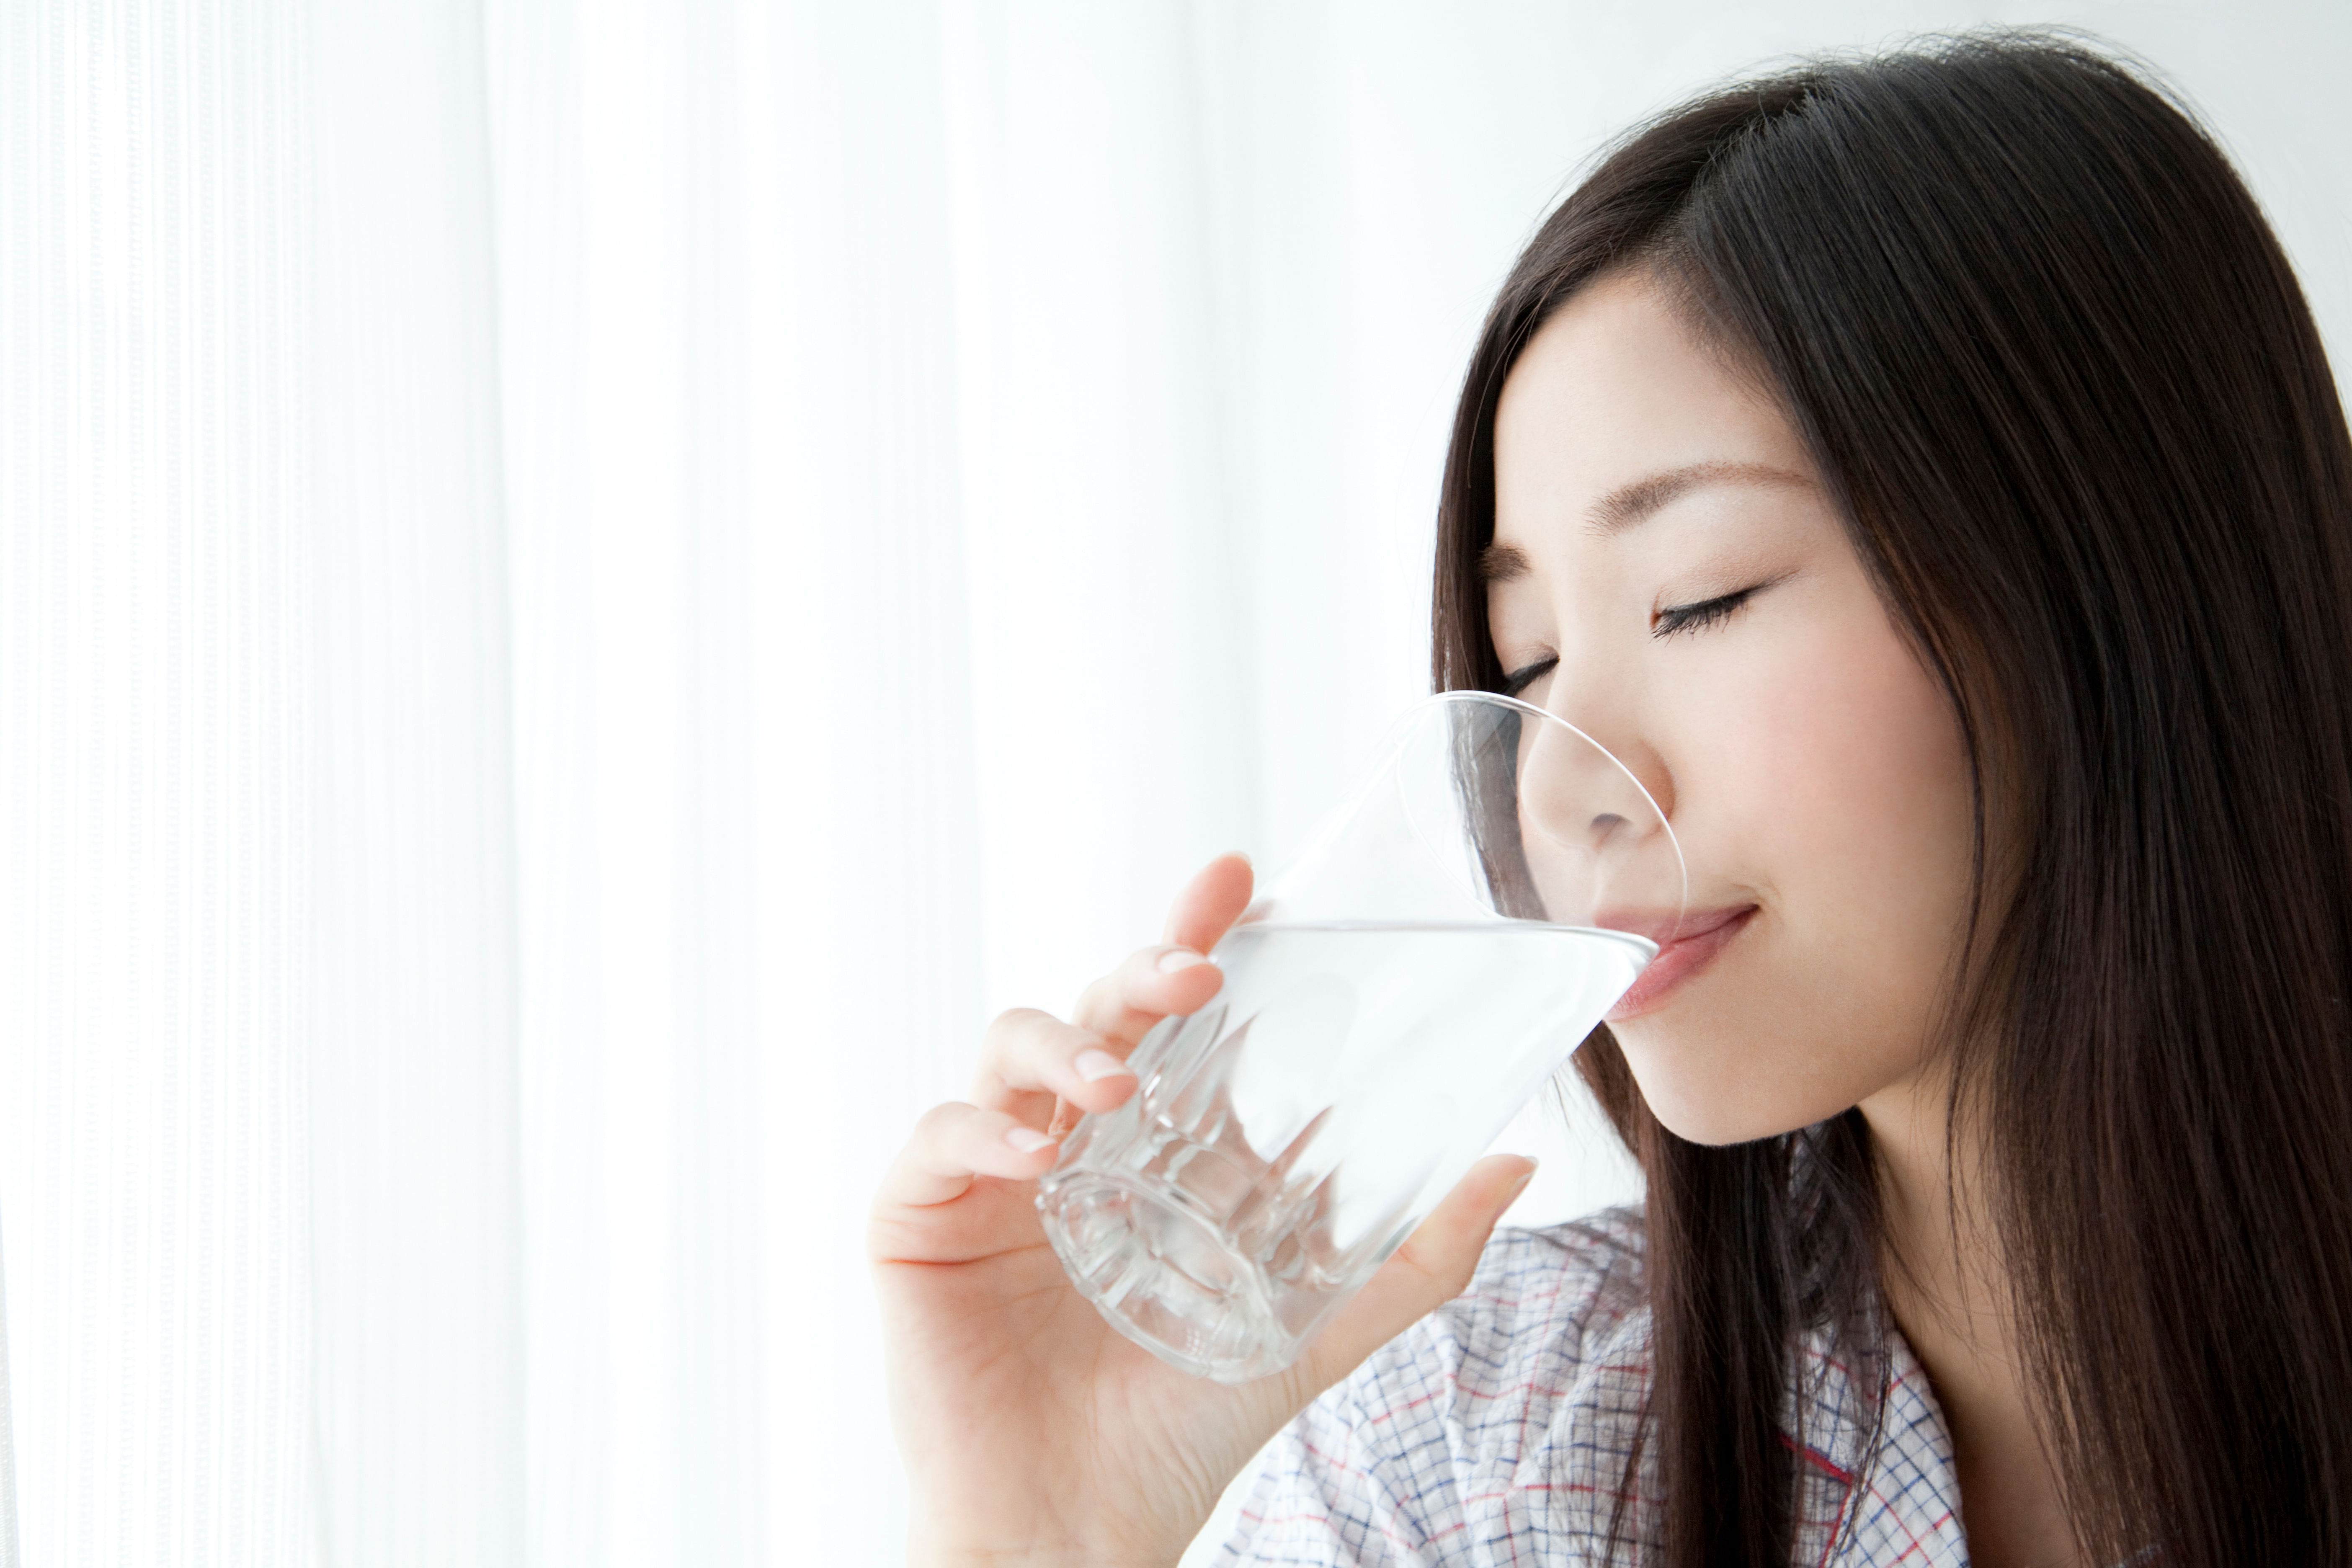 Drink japanese wife. Азиат пьет воду. Девушка пьет воду азиатка. Девушка пьет воду азаитка. Молоко.